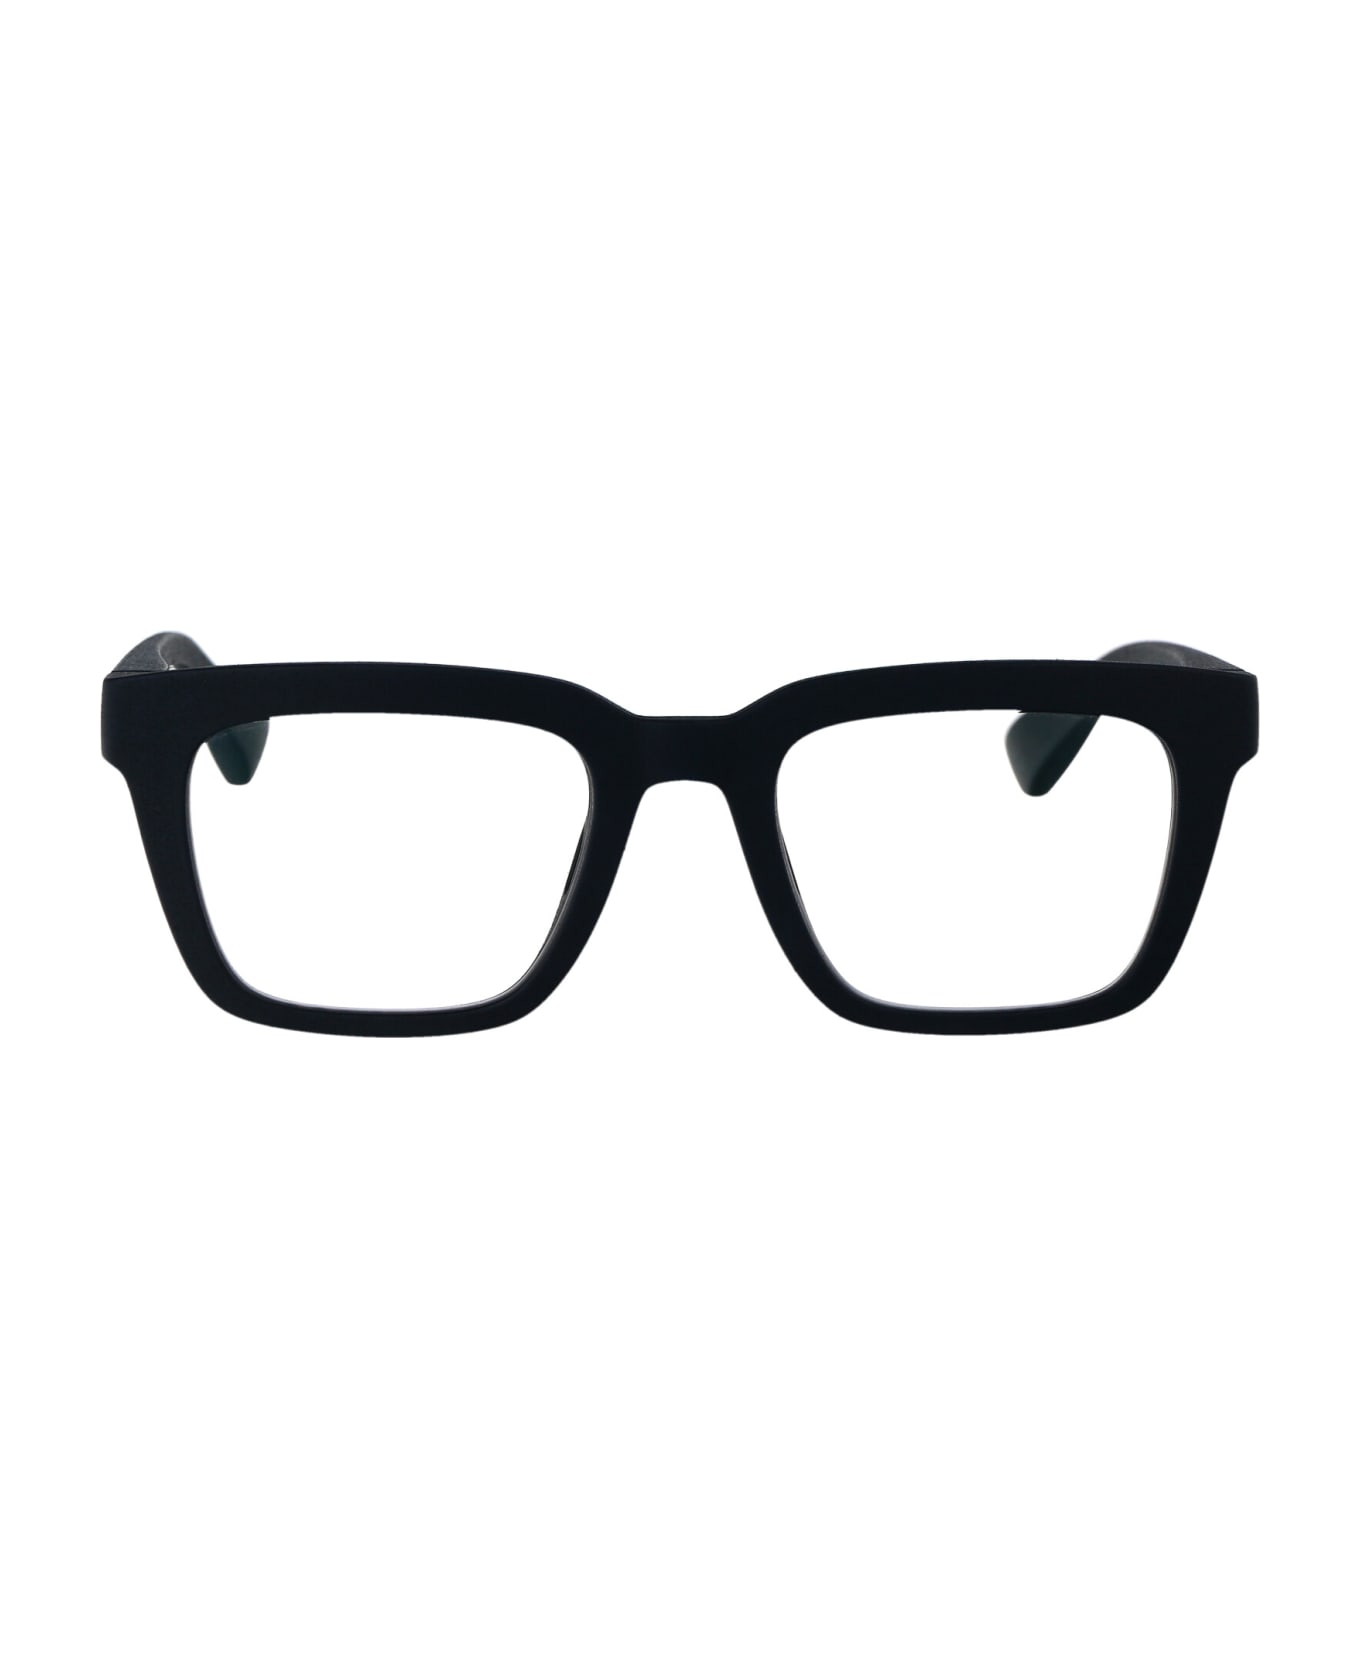 Mykita Souda Glasses - 346 MD34-Indigo Clear